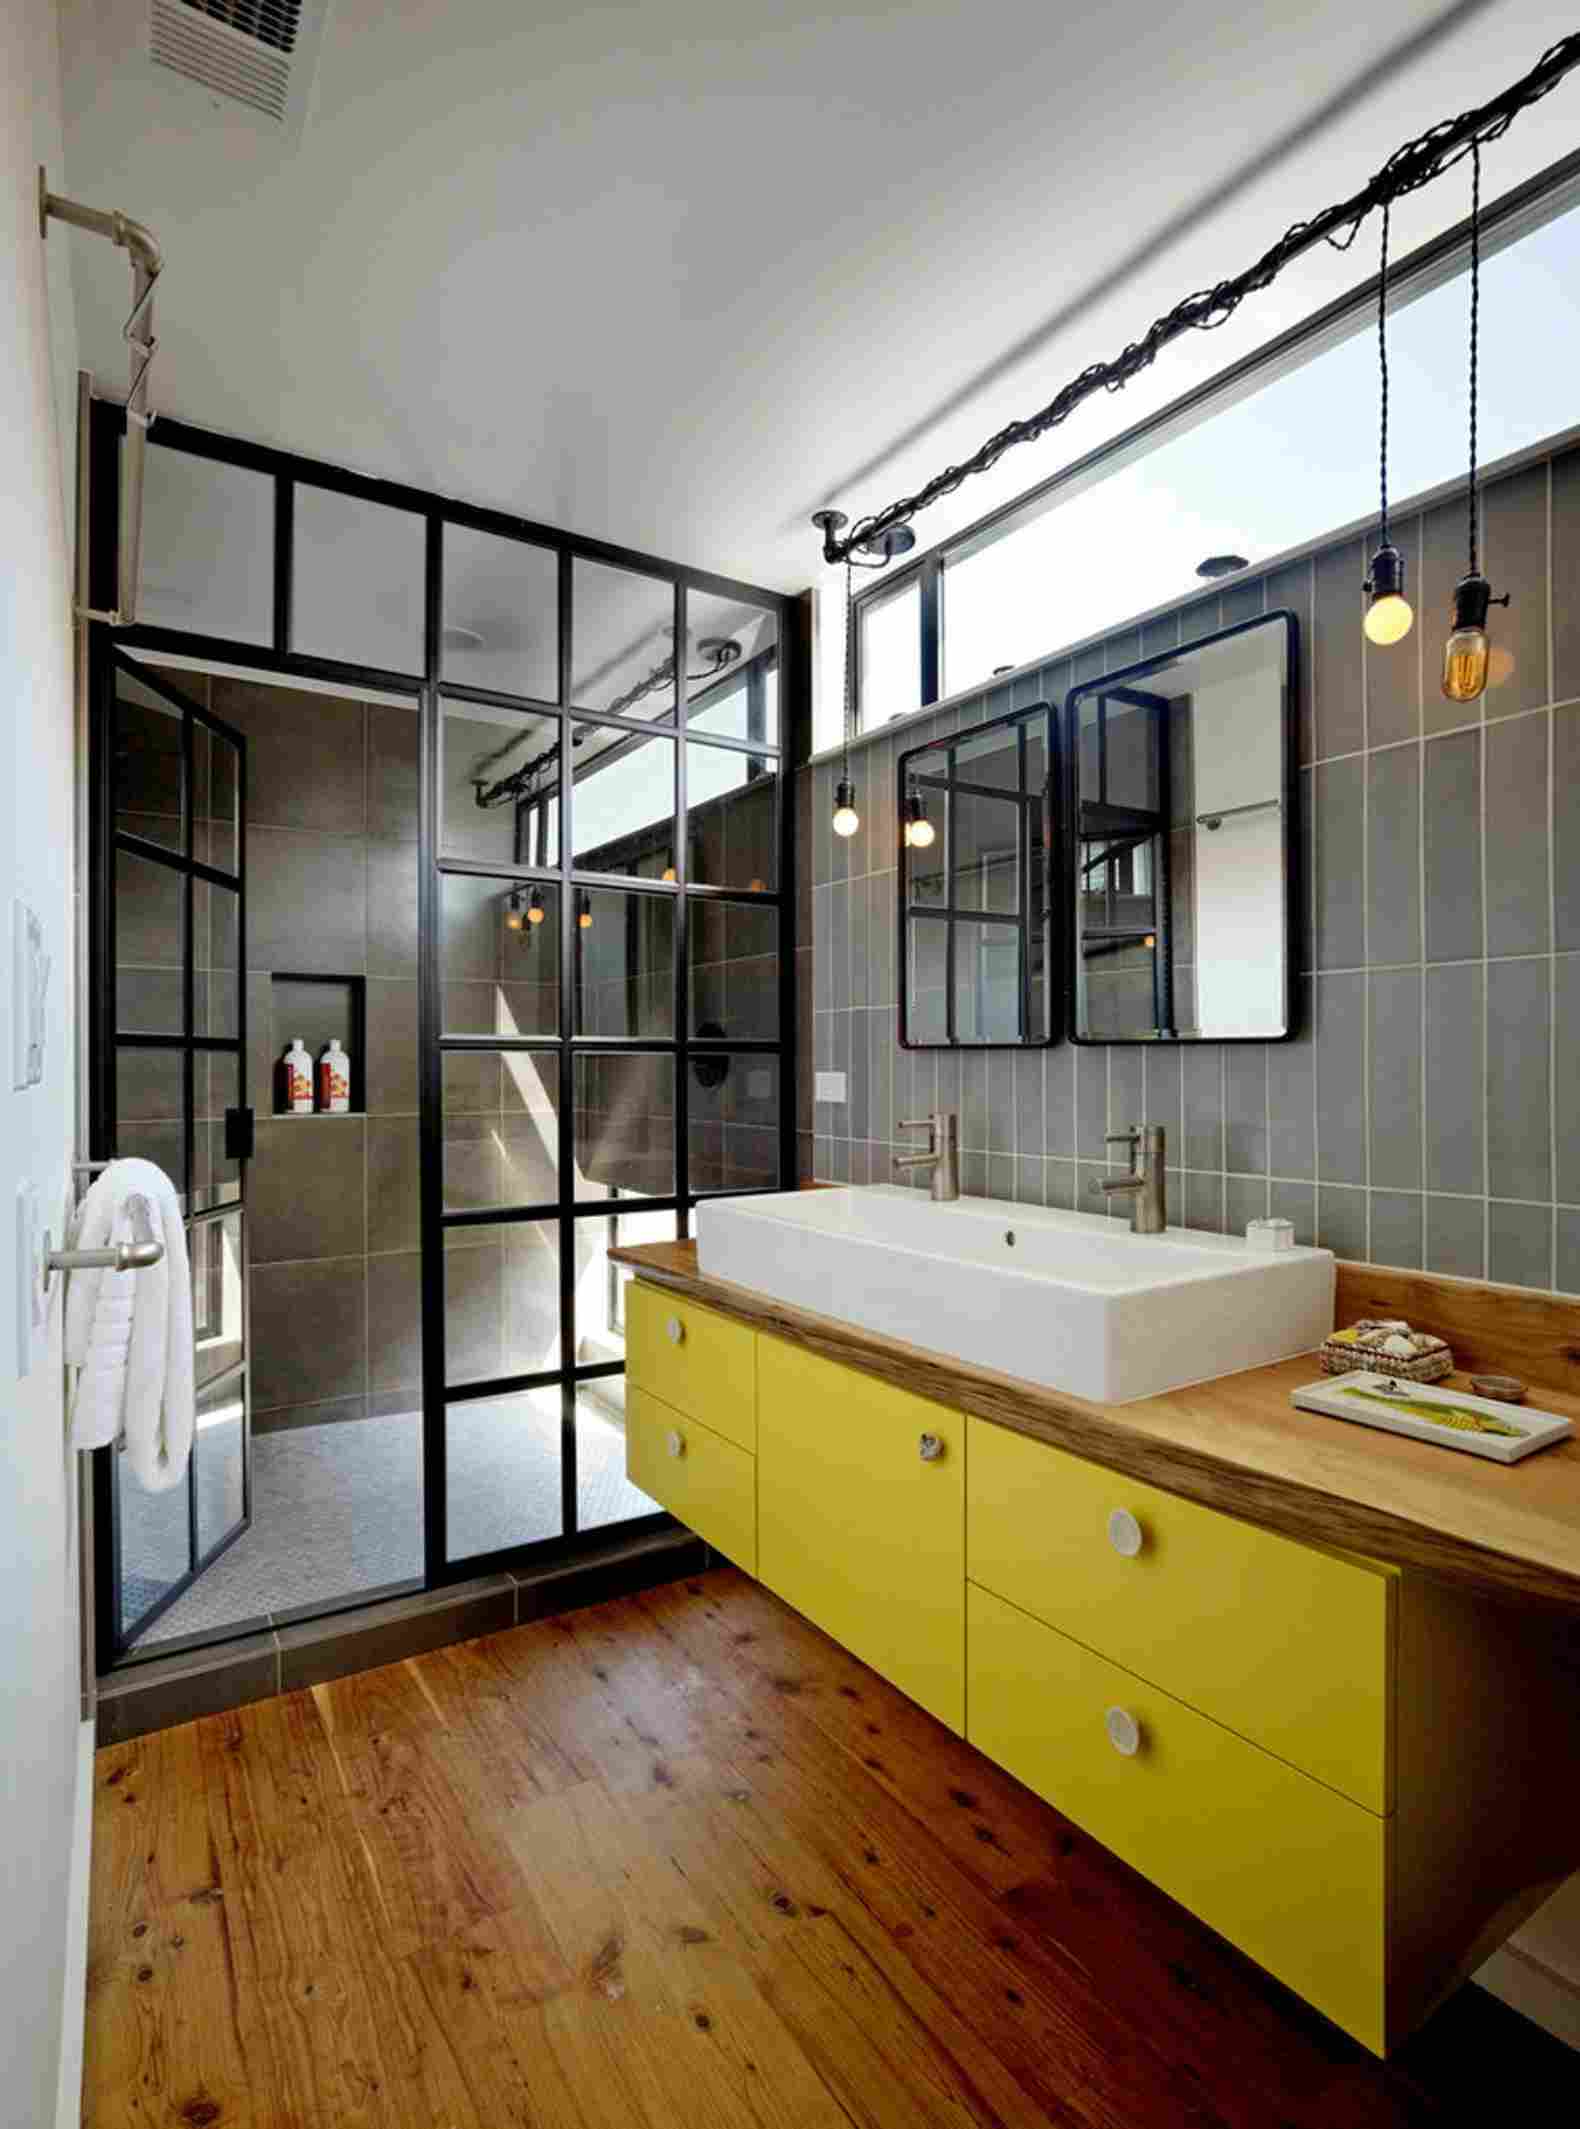 Shower glass put home furniture bathroom modern upgraded living trends